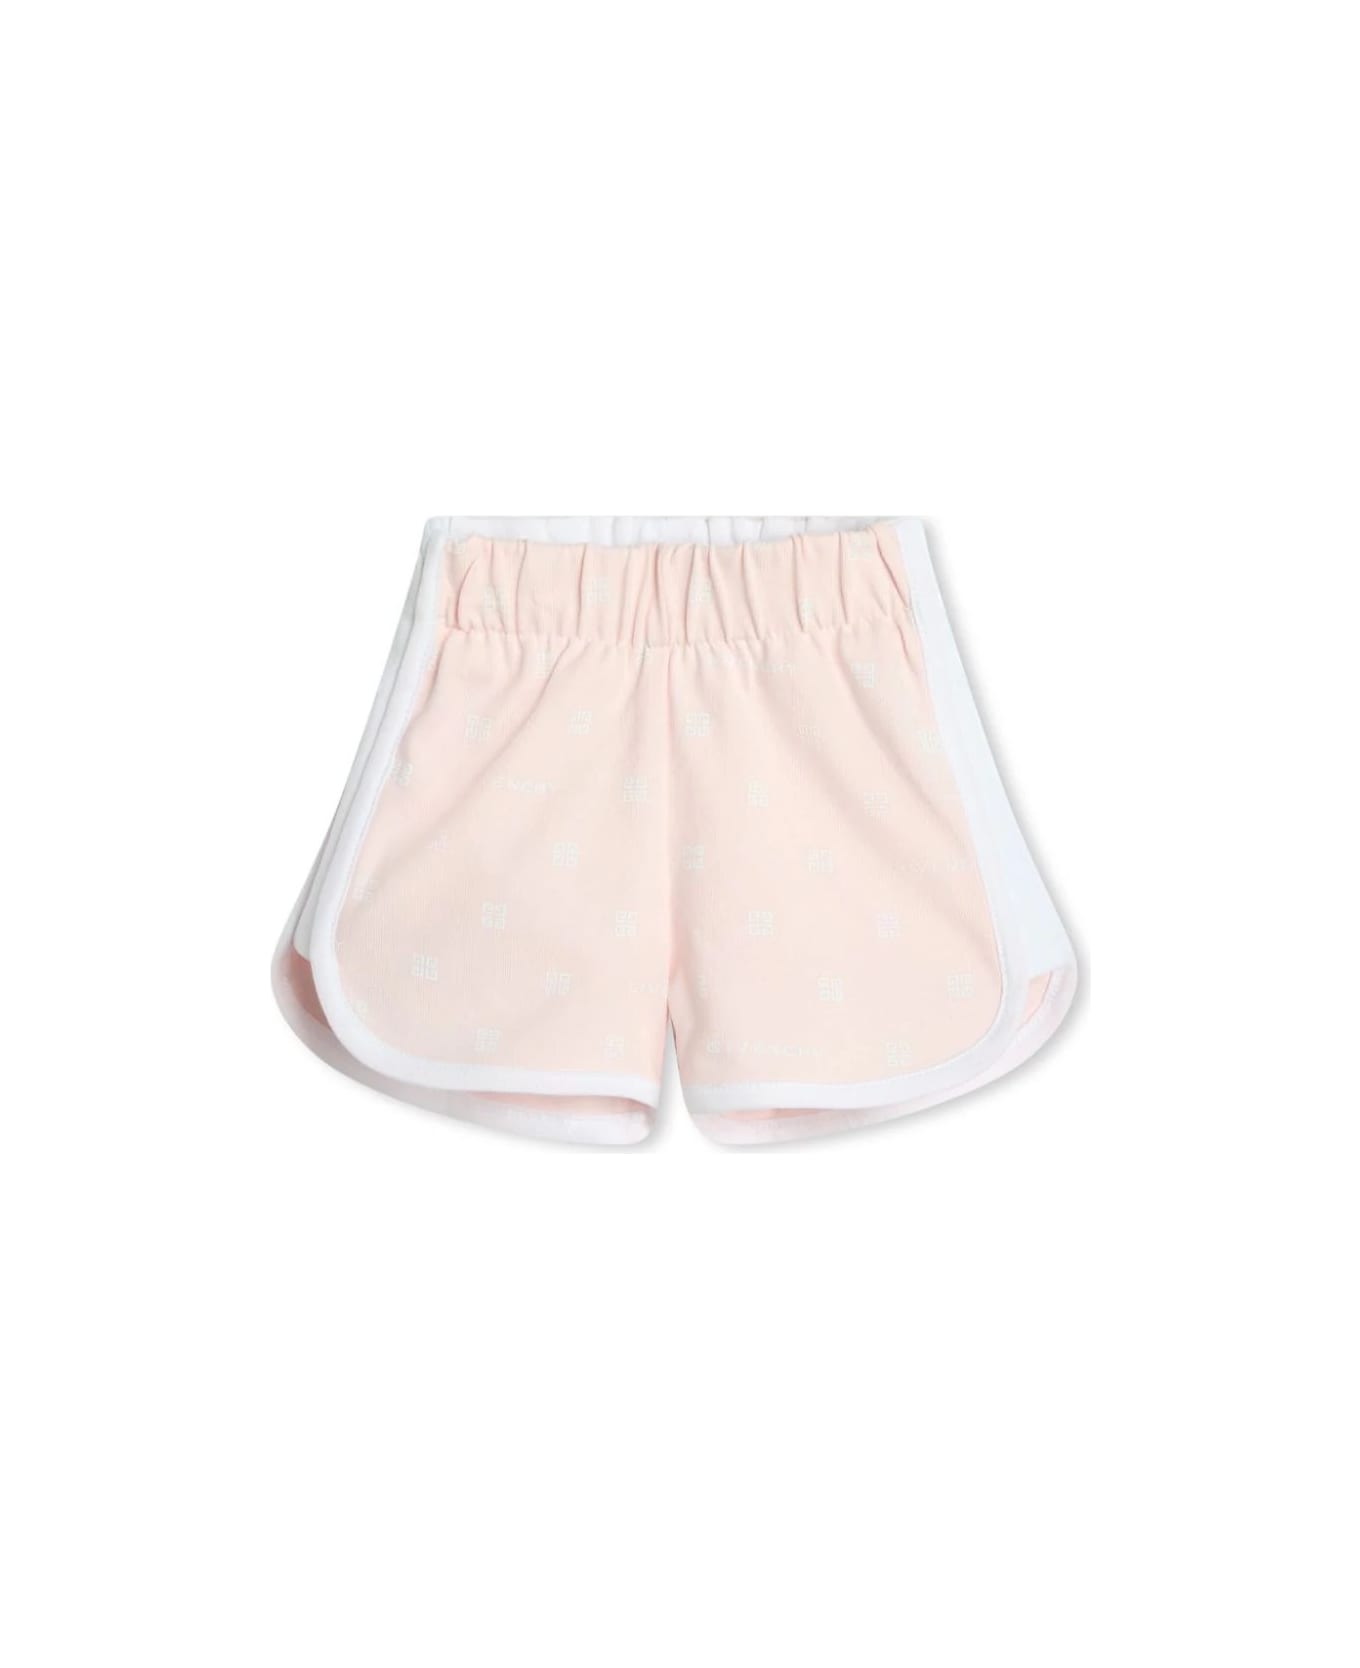 Givenchy White And Pink Set With T-shirt, Shorts And Bandana - Pink